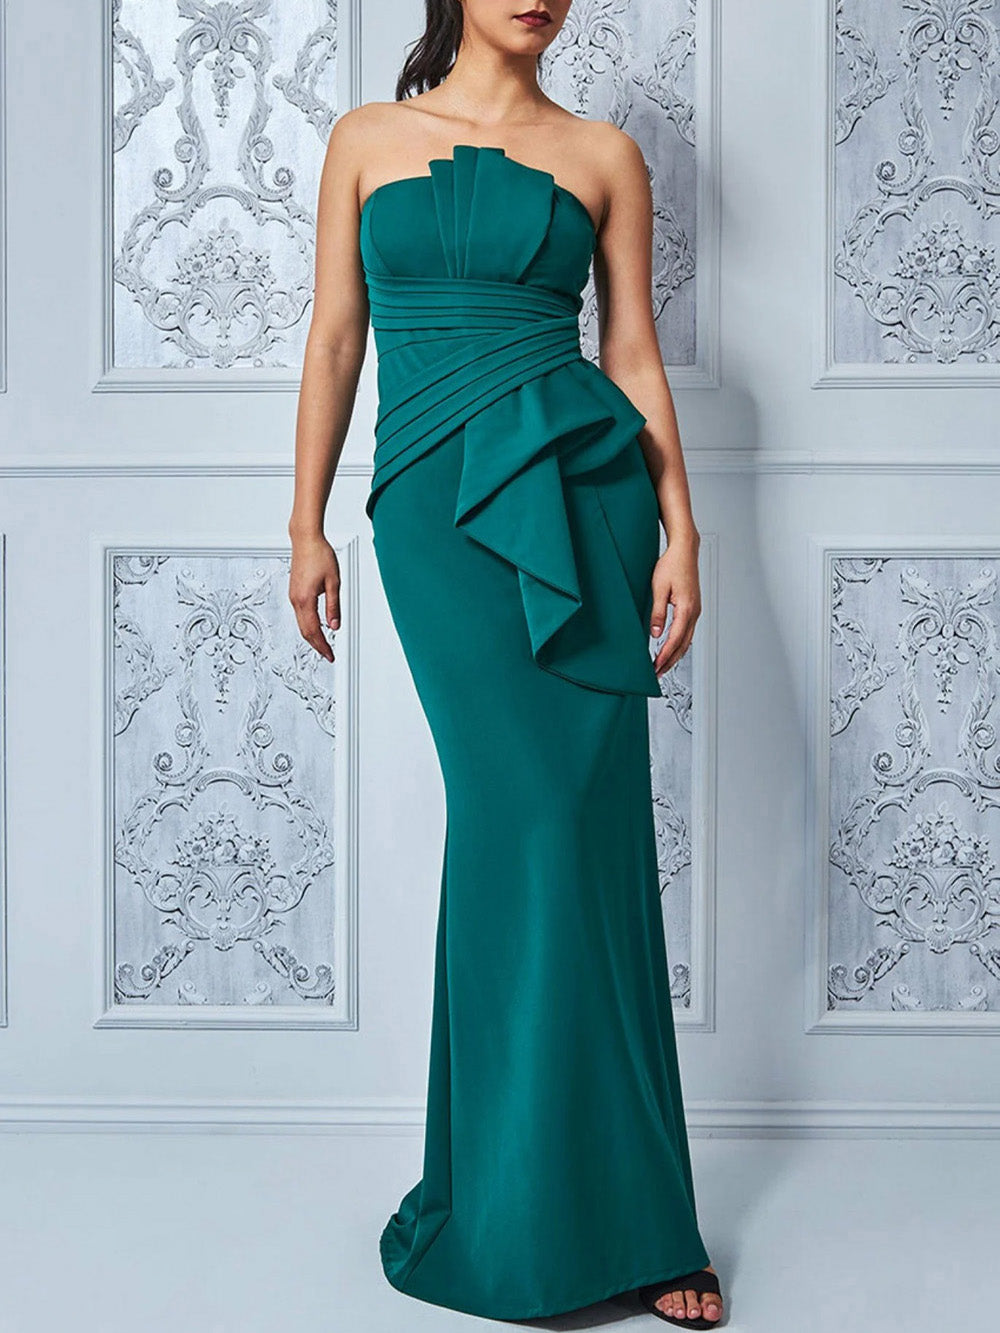 Hudson maxi dress in emerald green